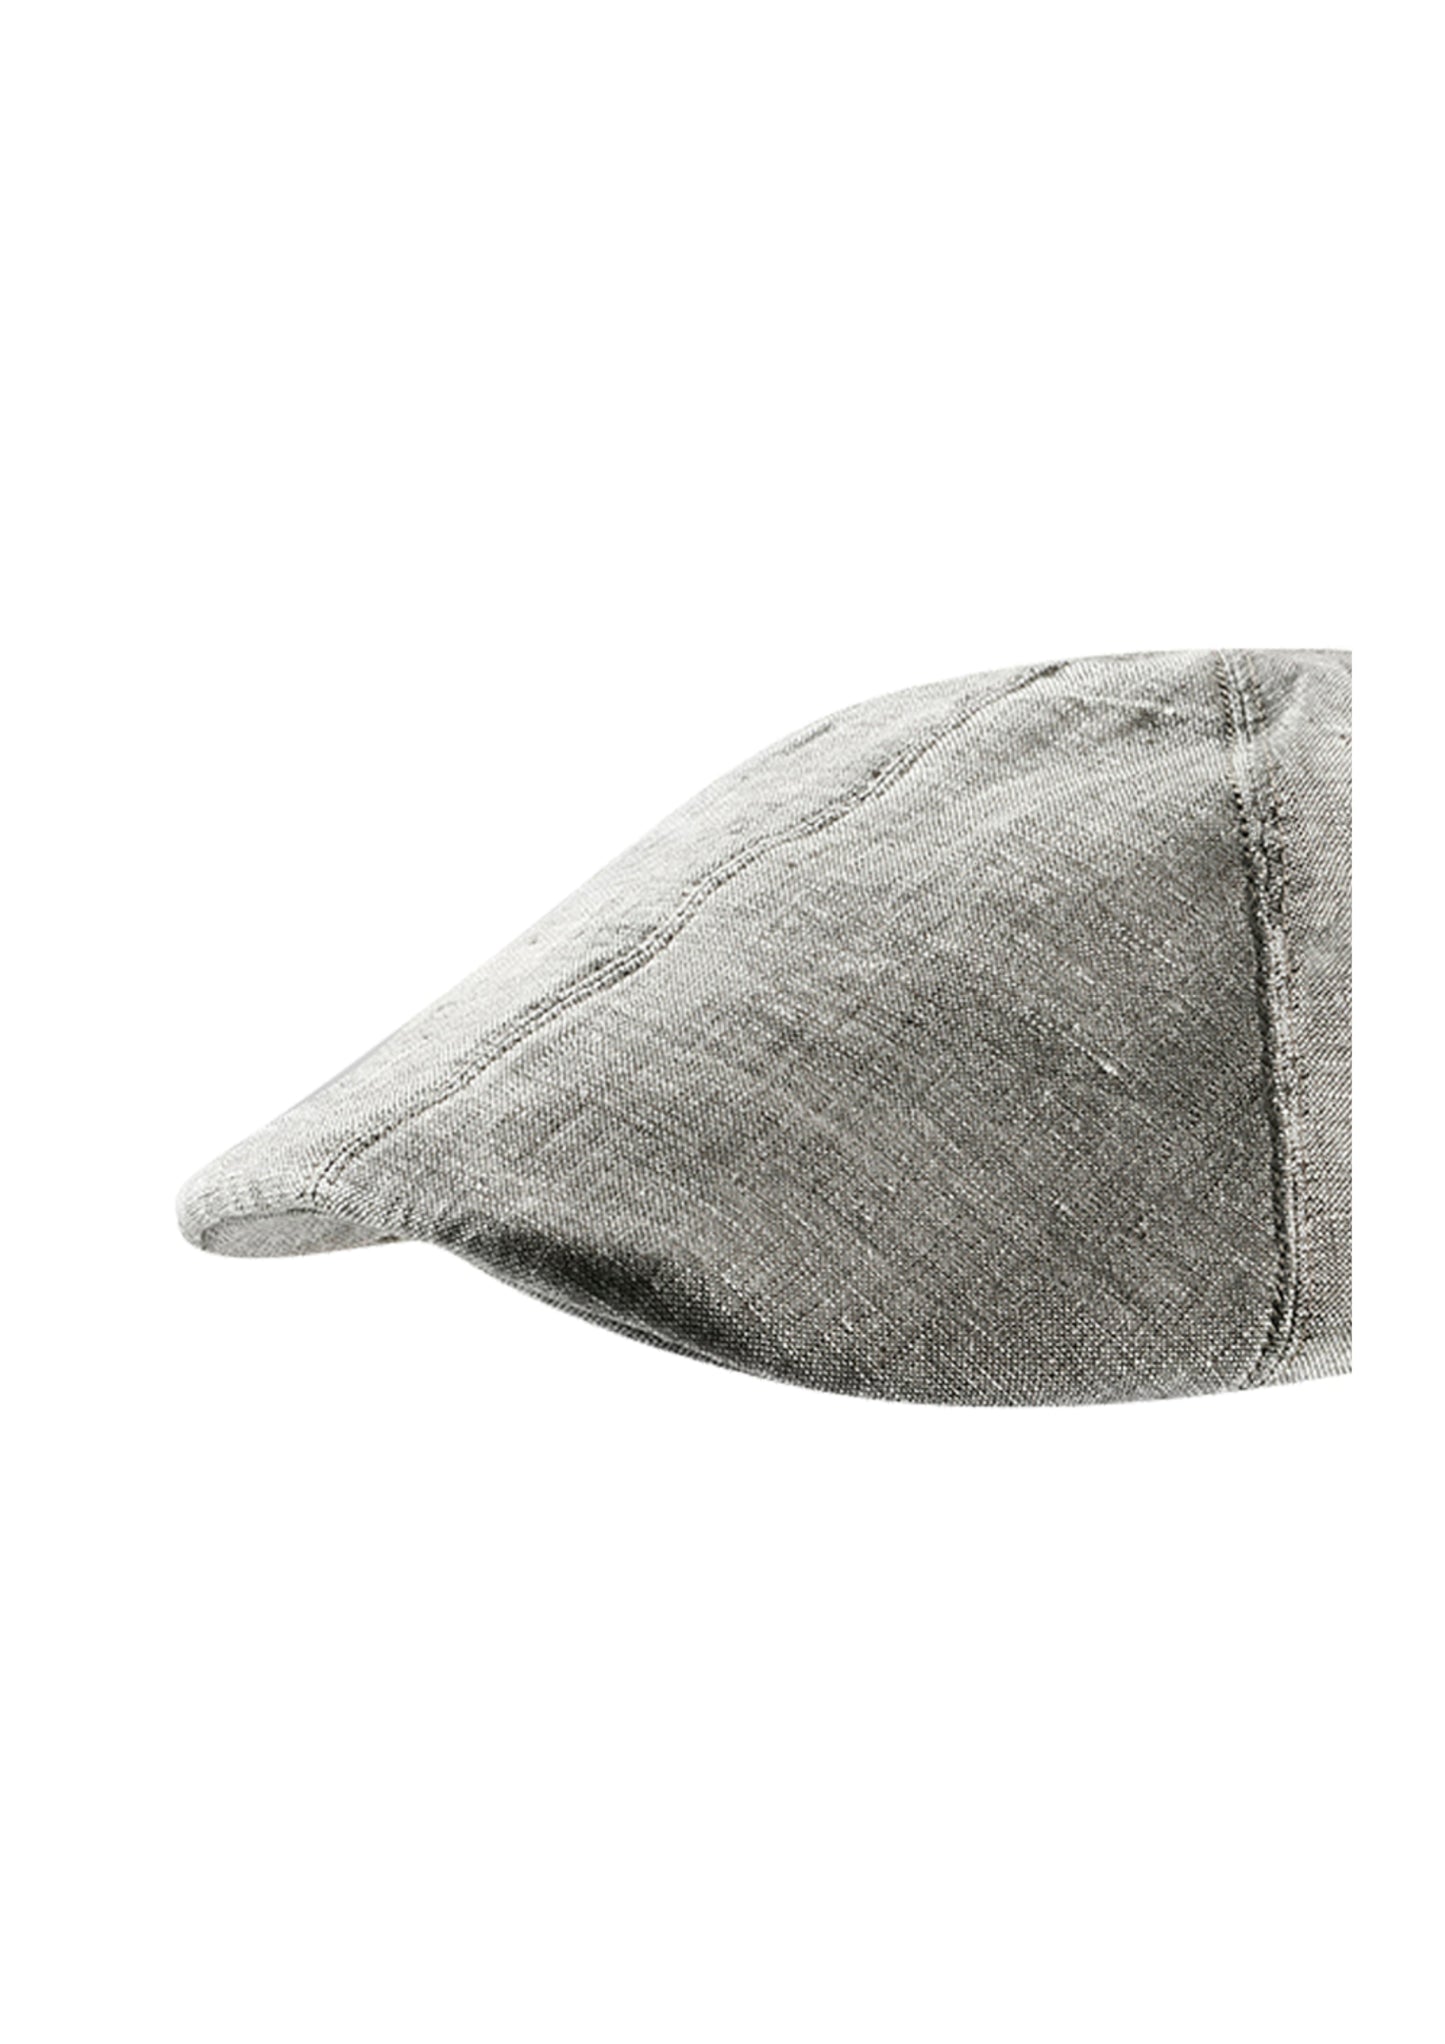 Flat cap in a sporty linen look in sage/green